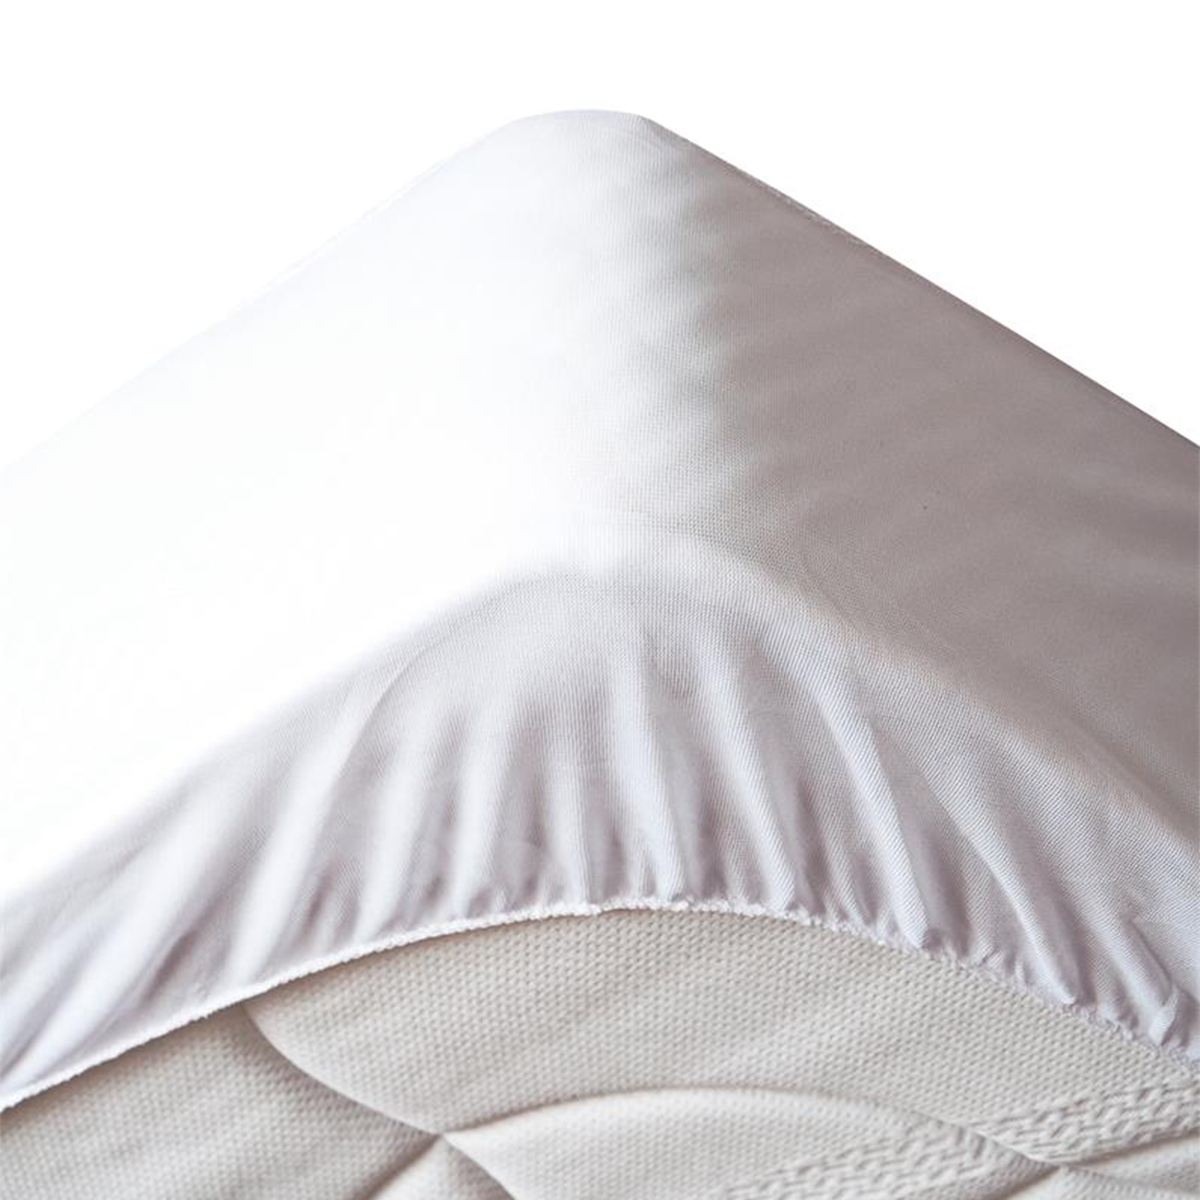 Protects mattress Fleece Cotton 140 x 190 cm